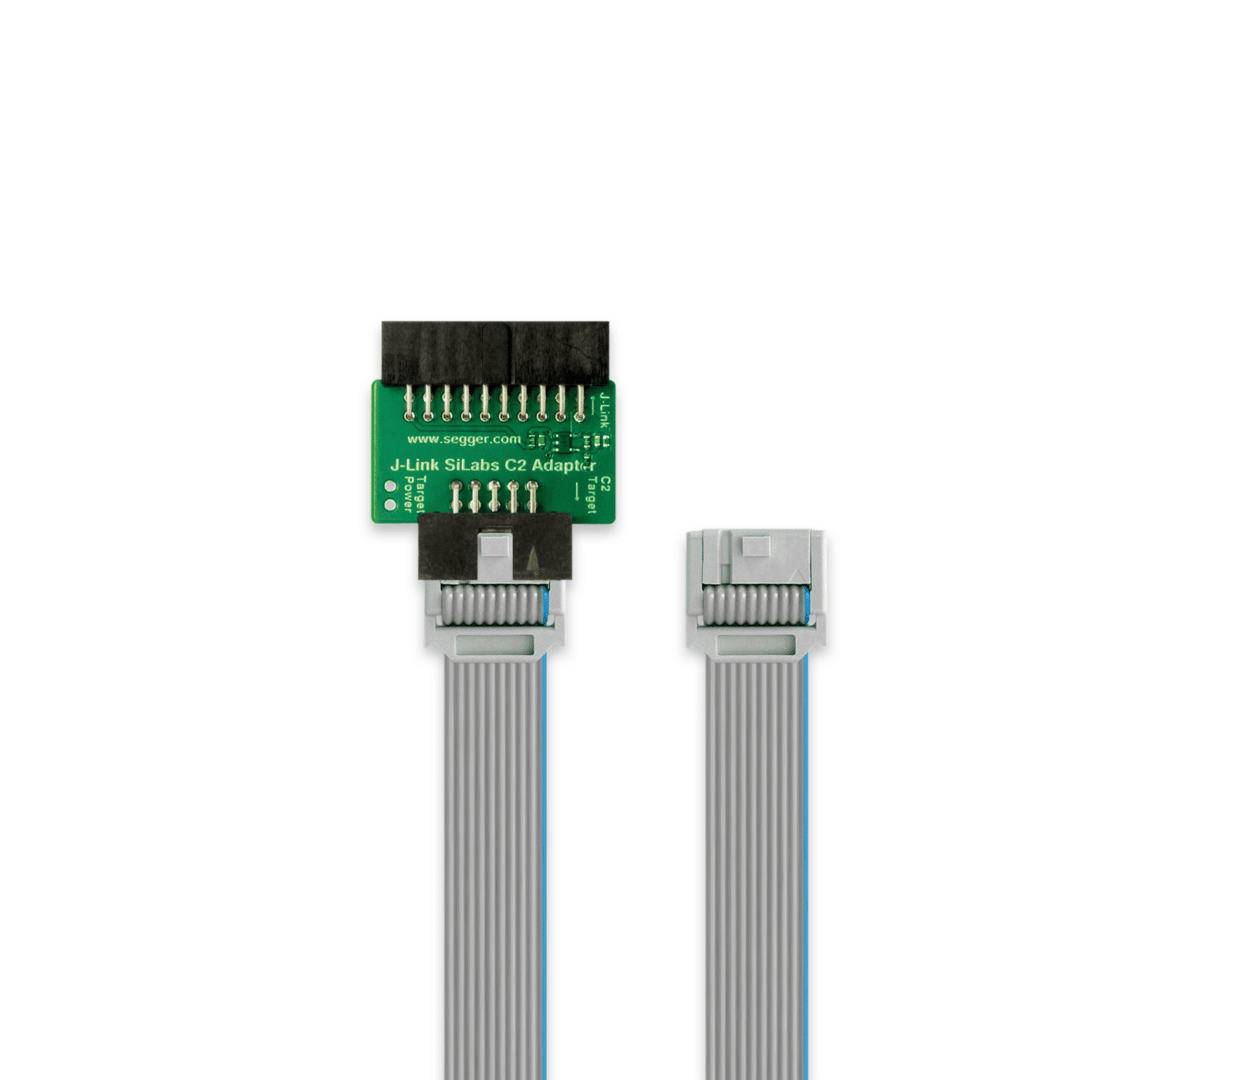 SEGGER J-Link SiLabs C2 Adapter